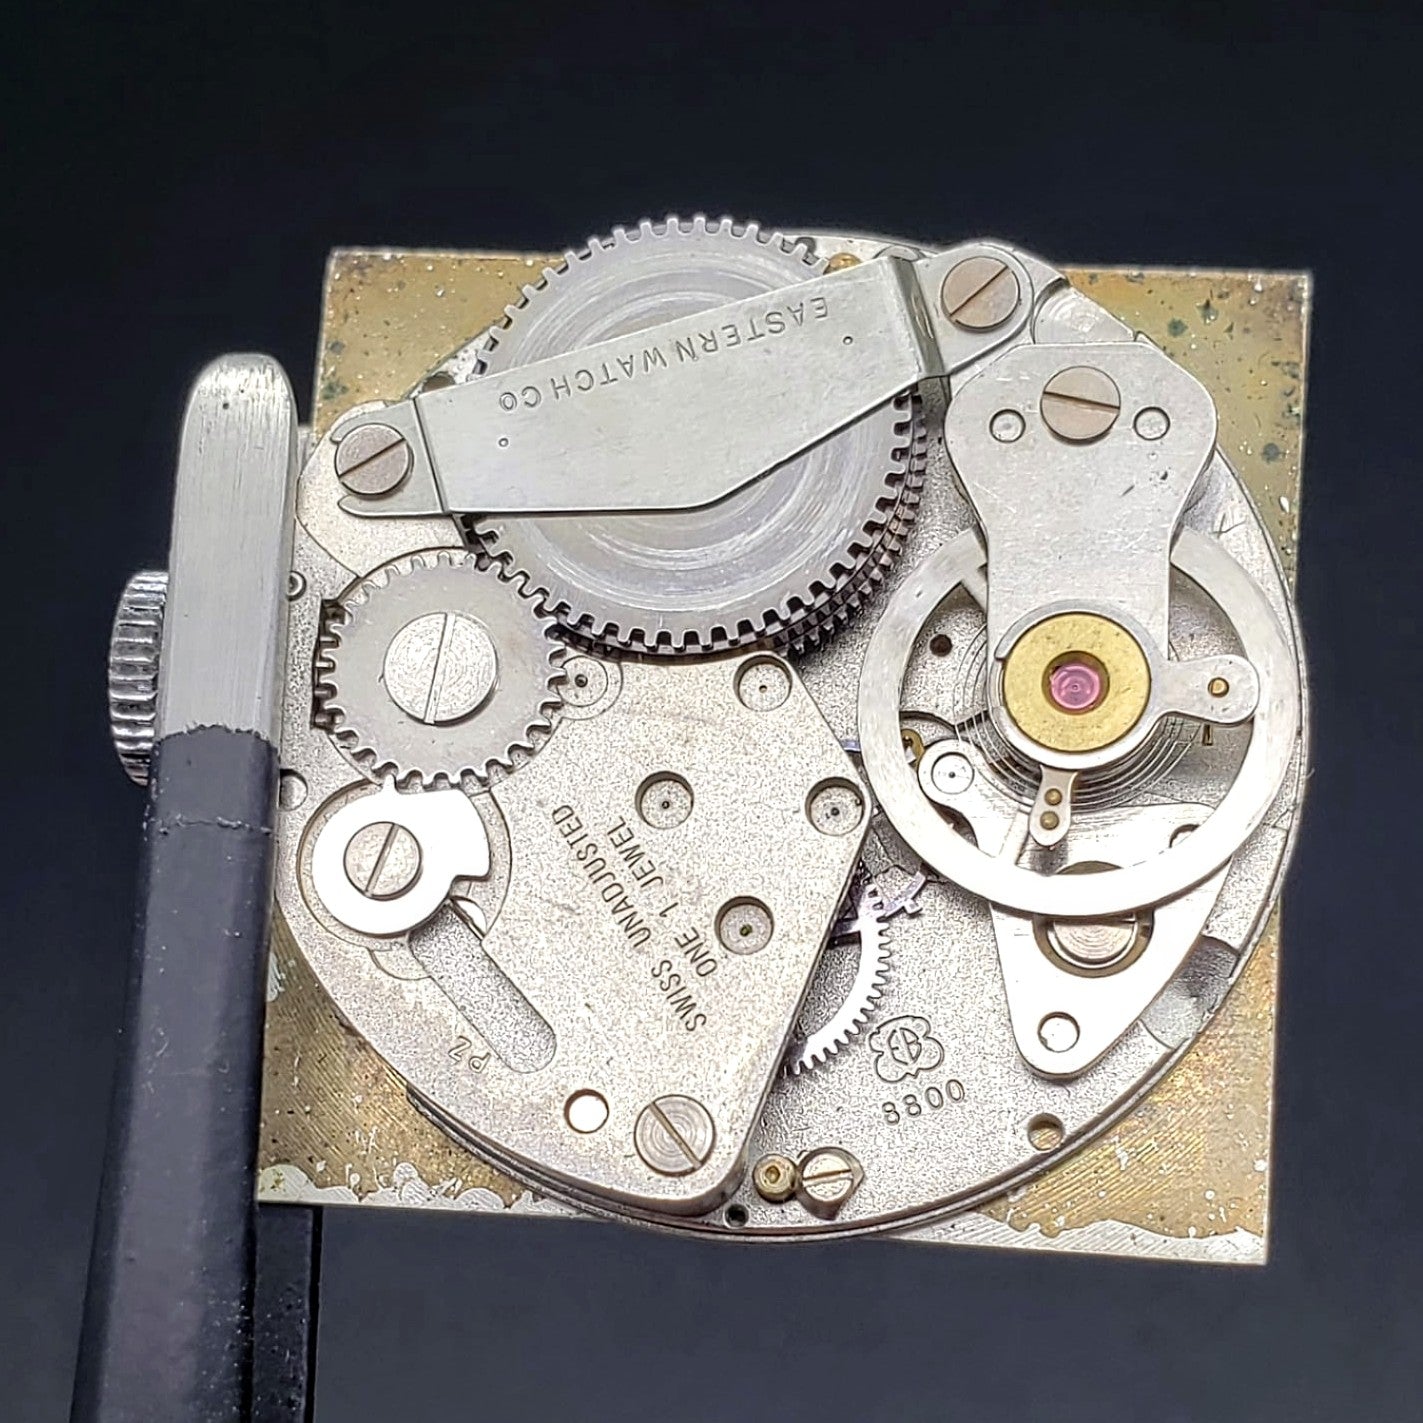 Vintage Cimeqa Wristwatch Swiss Made Caliber EB 8800 Sunburst Dial Watch